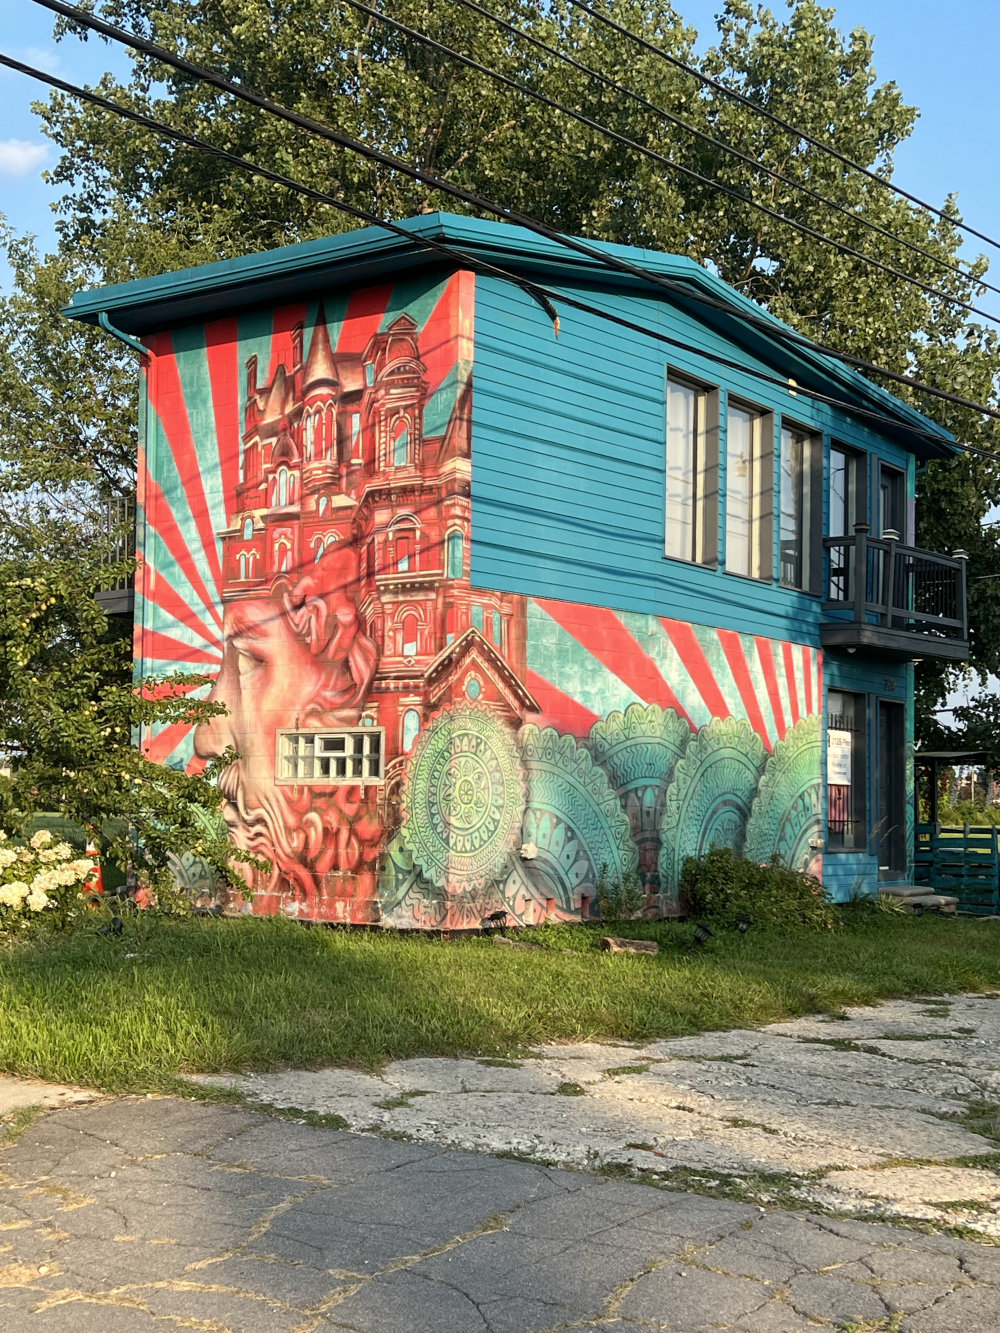 mural in Detroit by artist Beau Stanton.